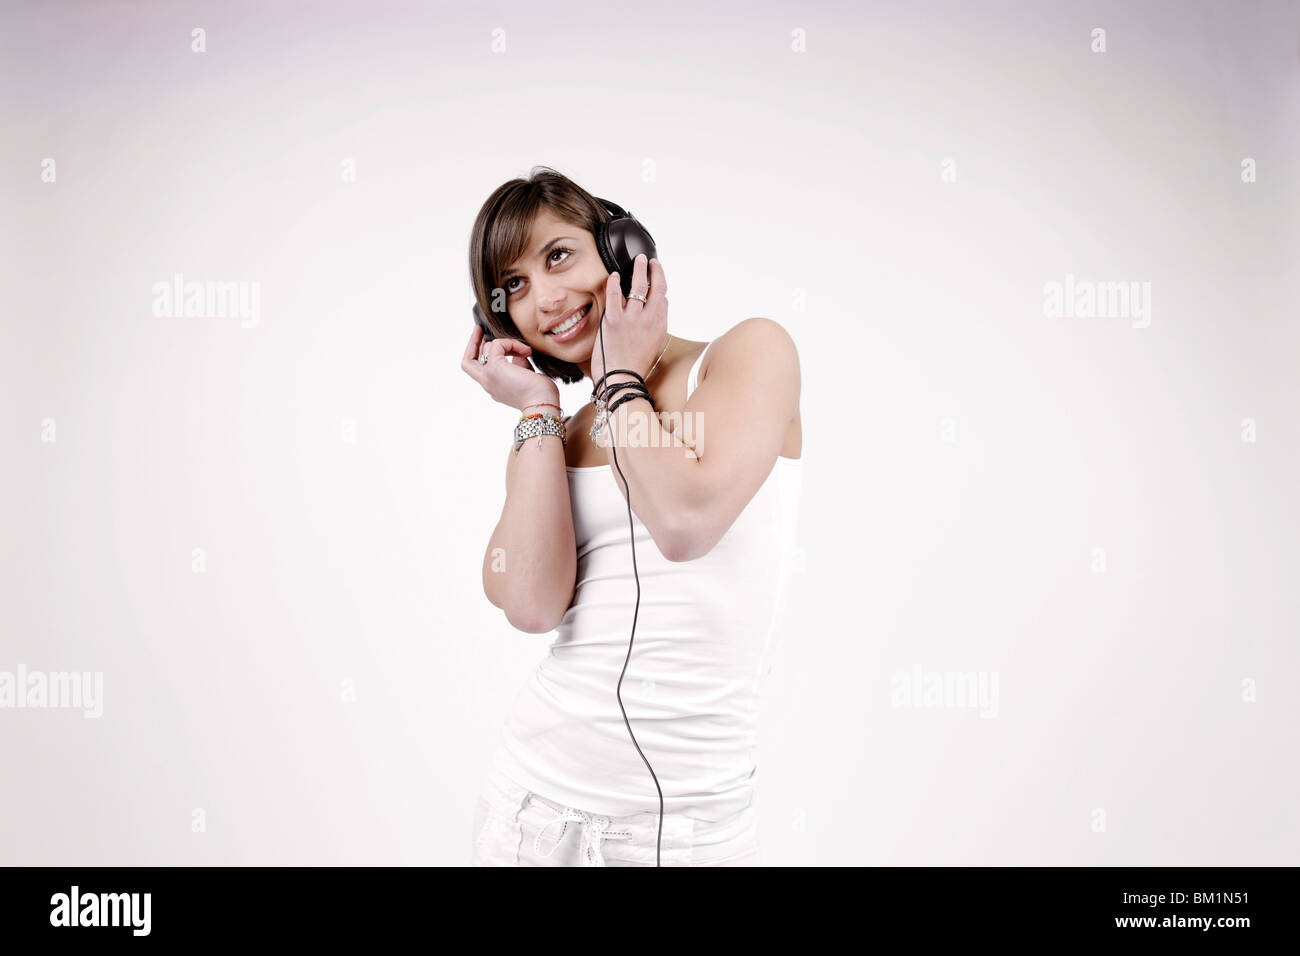 Young brunette woman, 25 years, standing, wearing headphones, listening to music, vibrant, joyful Stock Photo